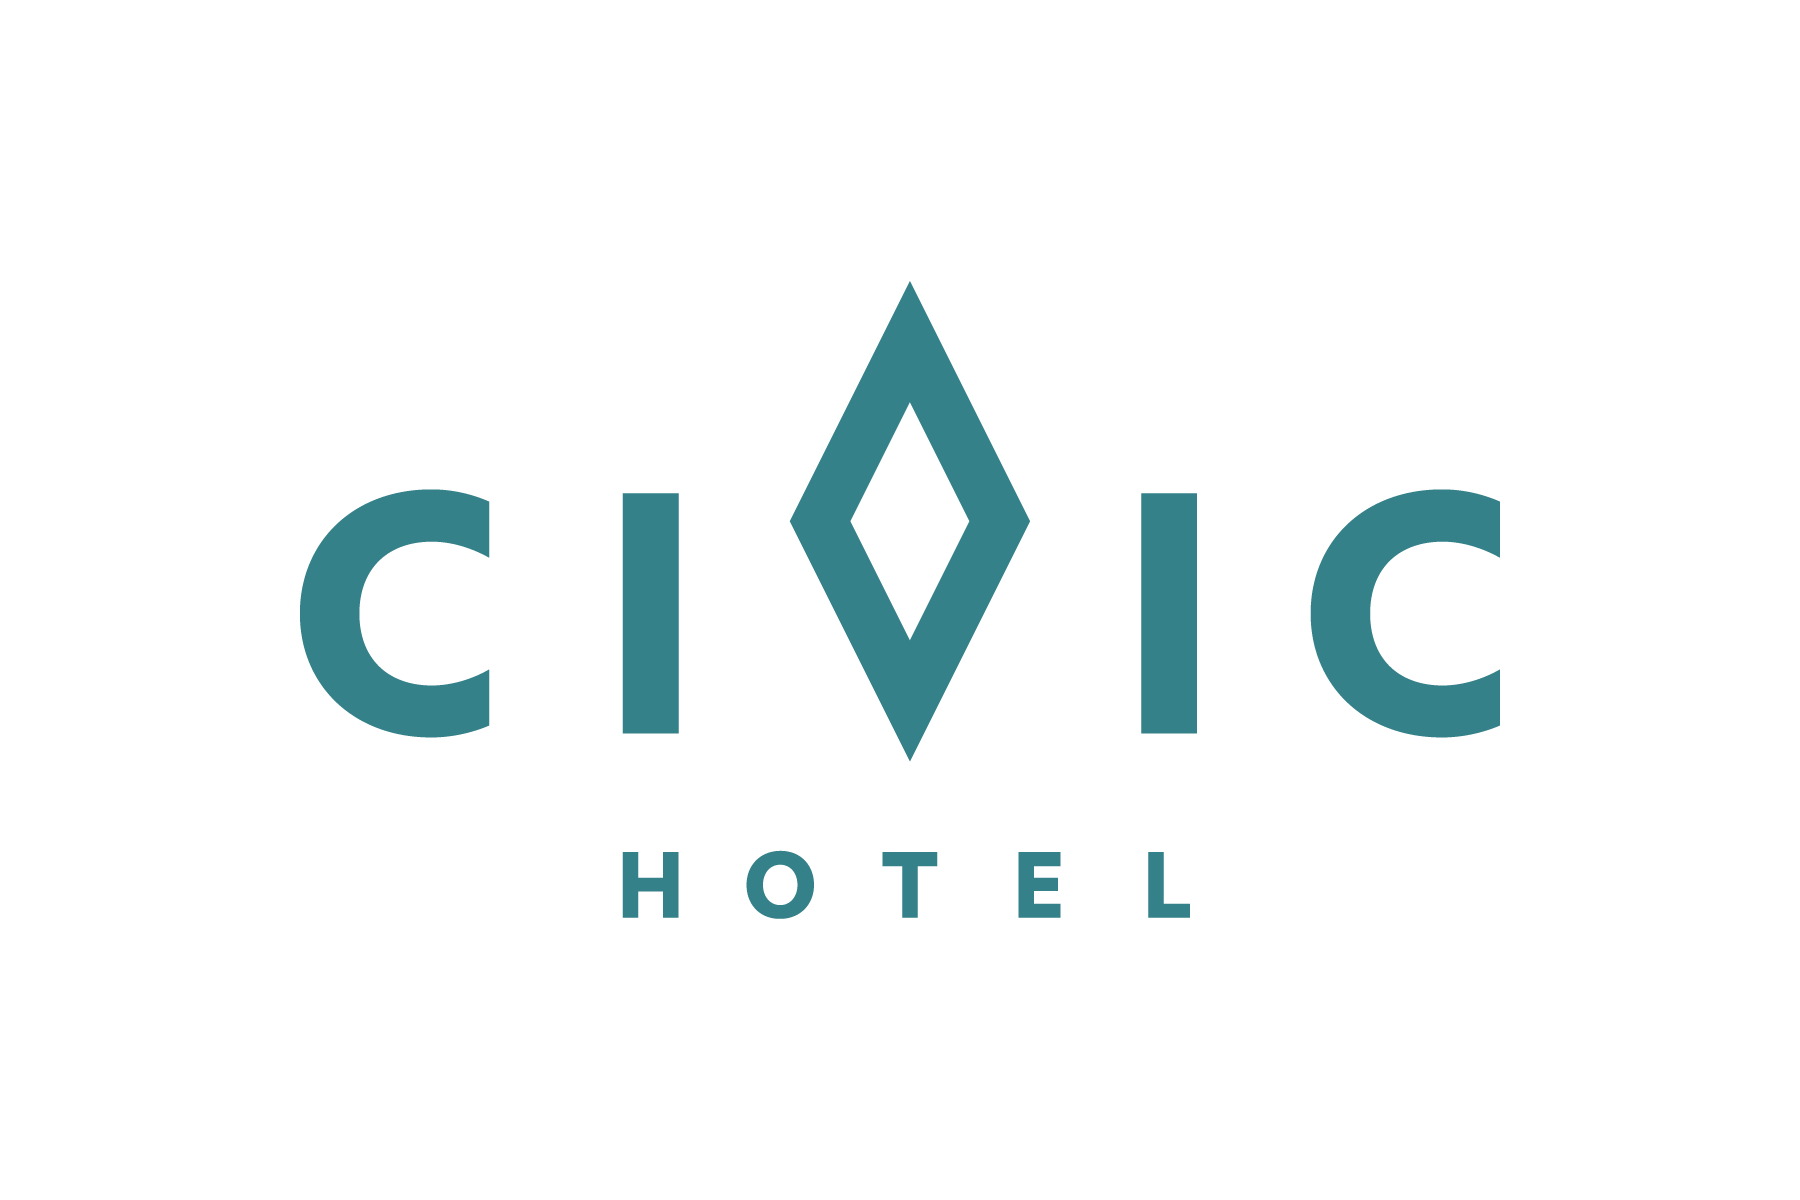 Civic Hotel